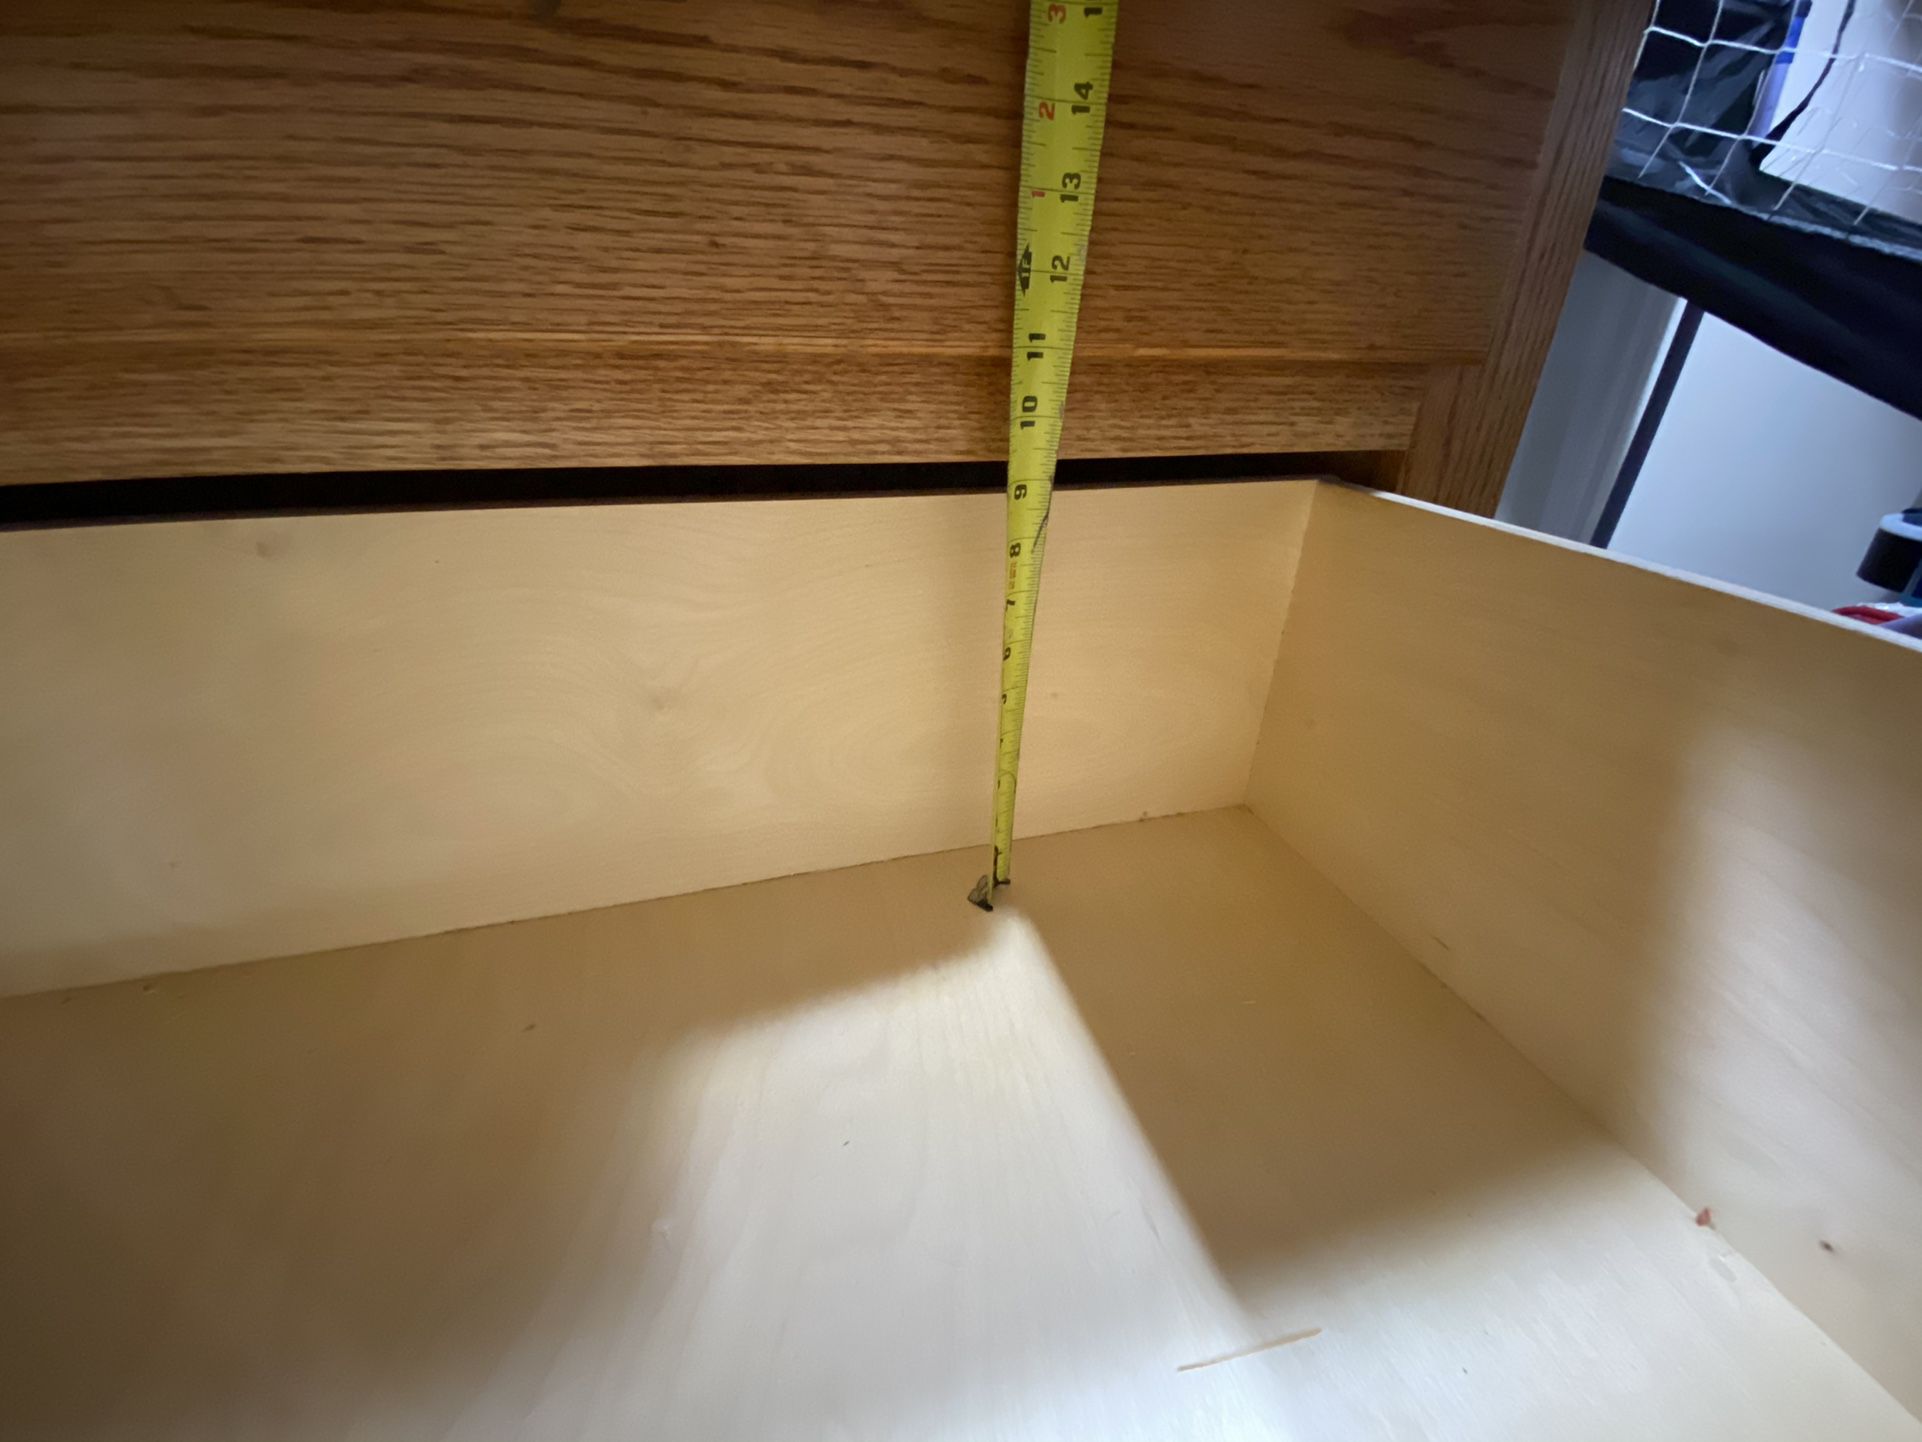 Handcrafted oak corner dresser with tons of storage￼